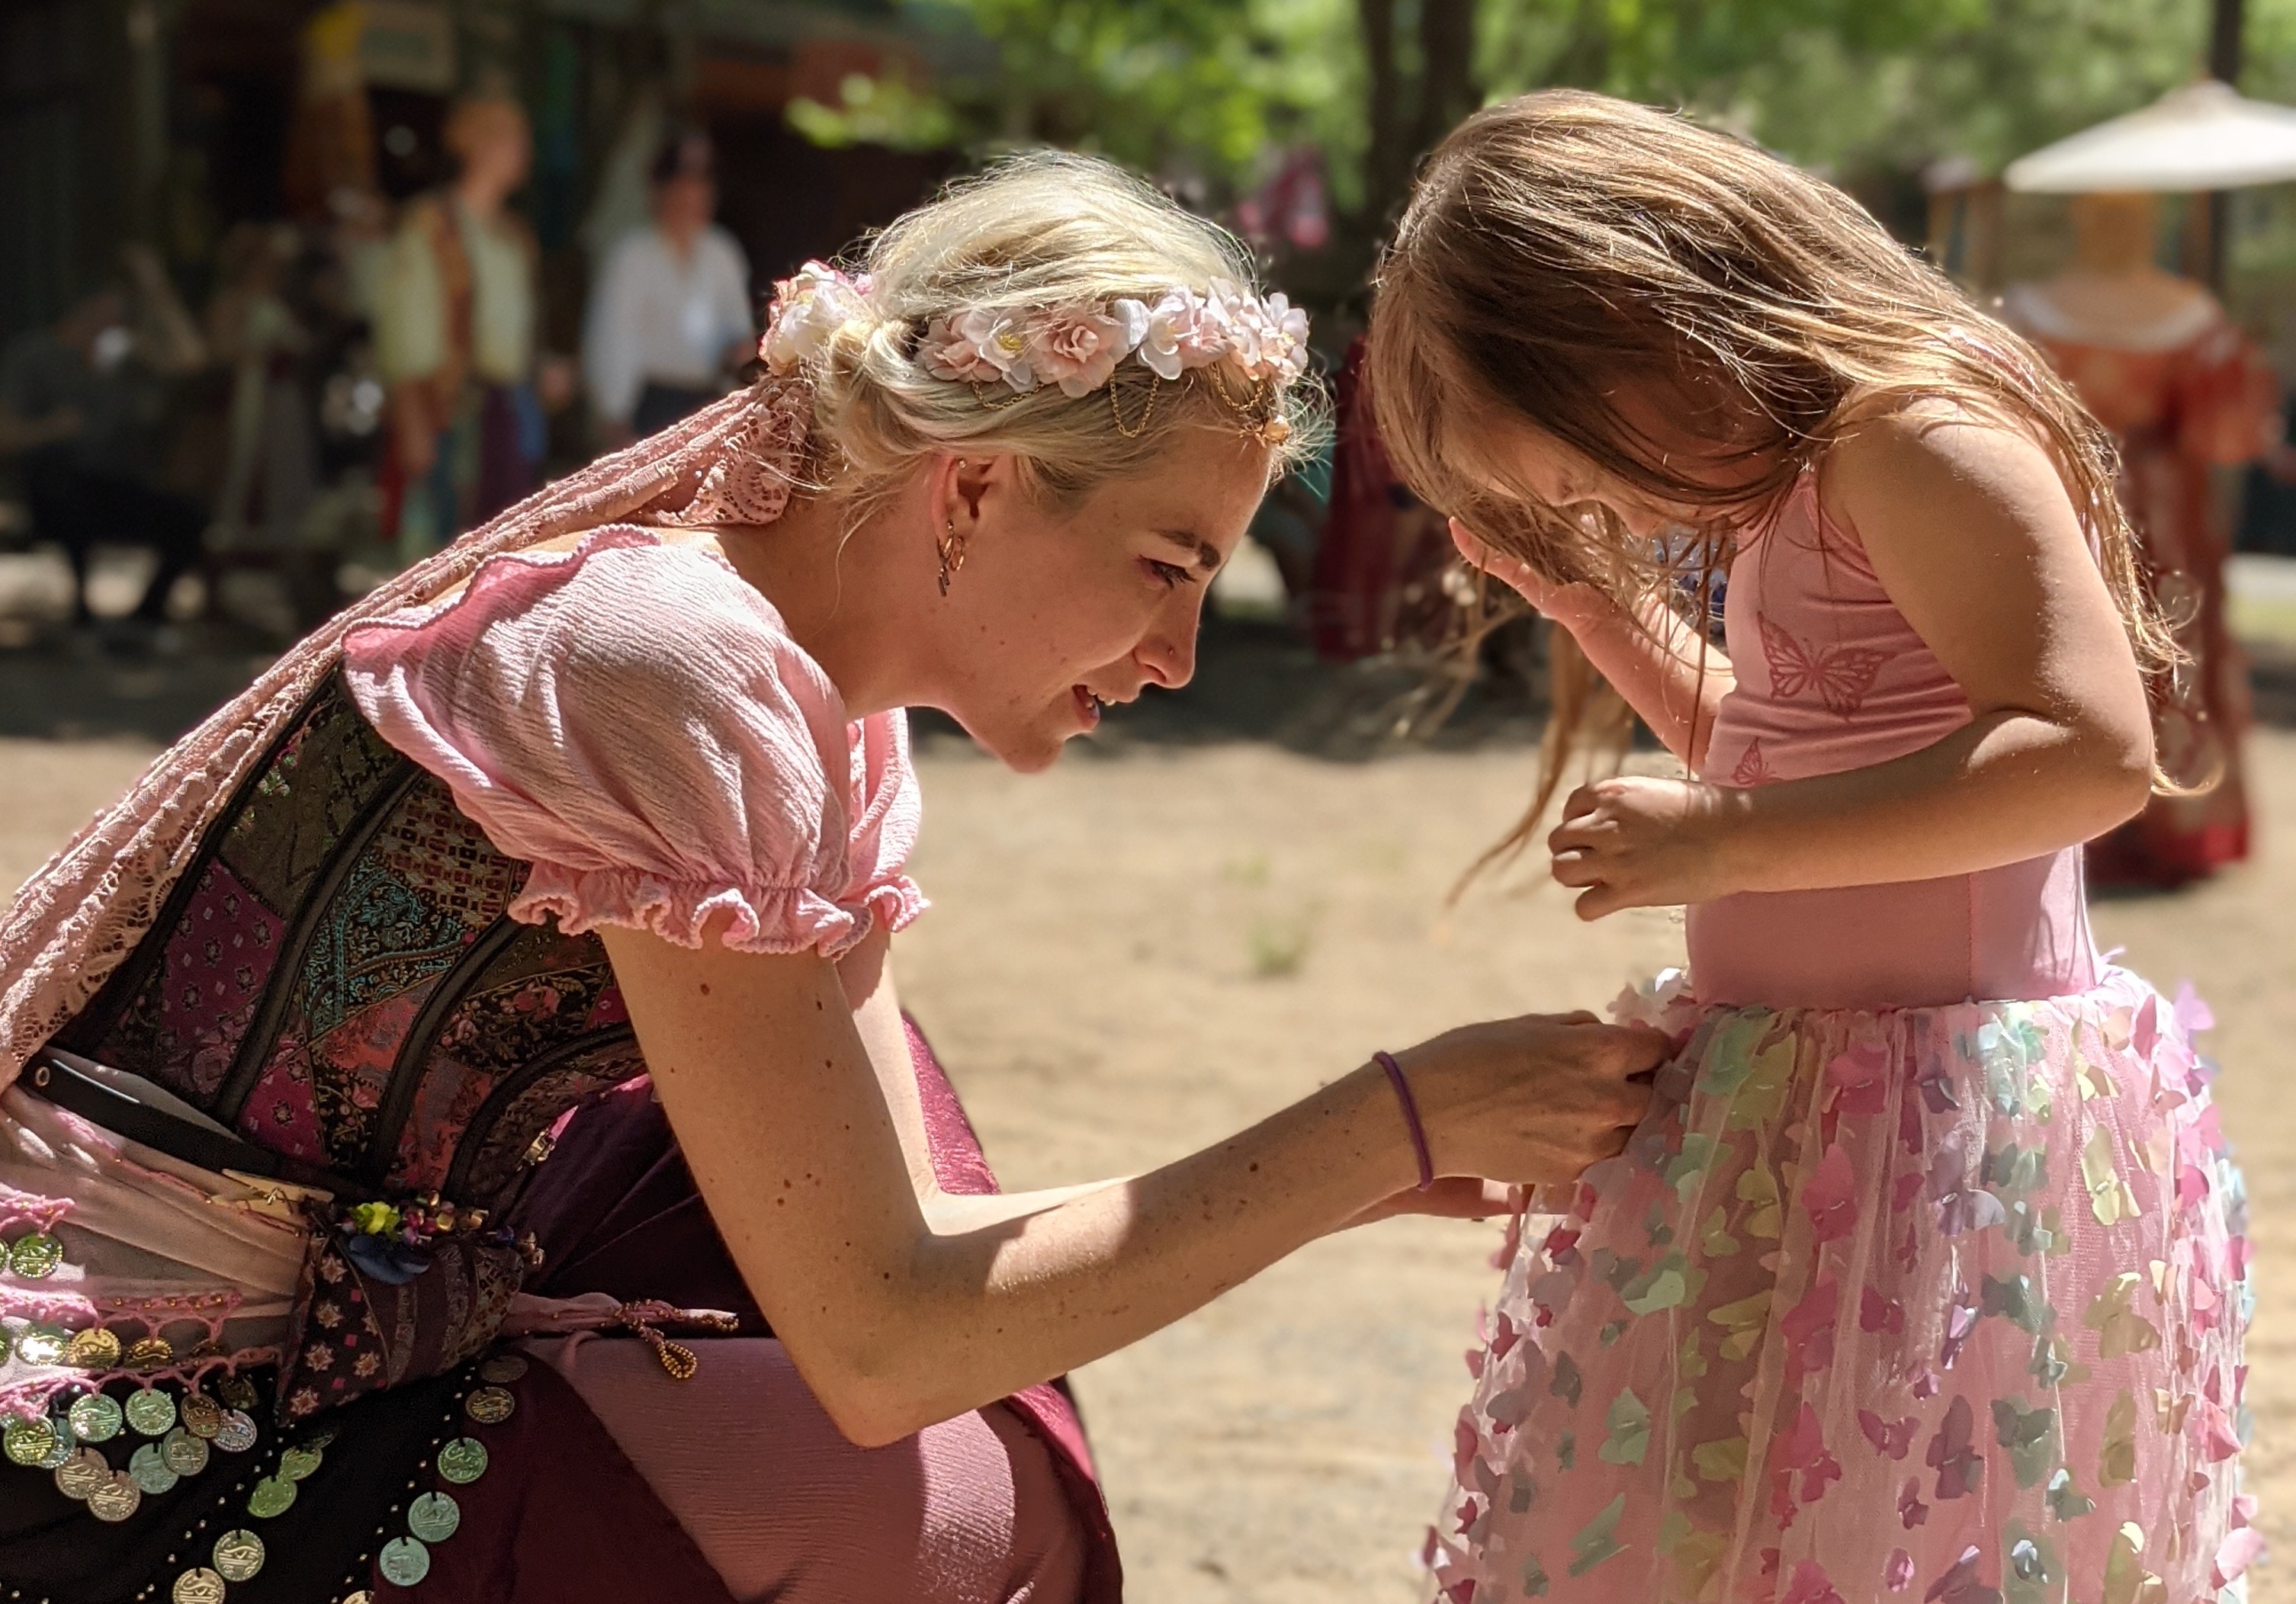 Meet a princess at the Oklahoma Renaissance Festival